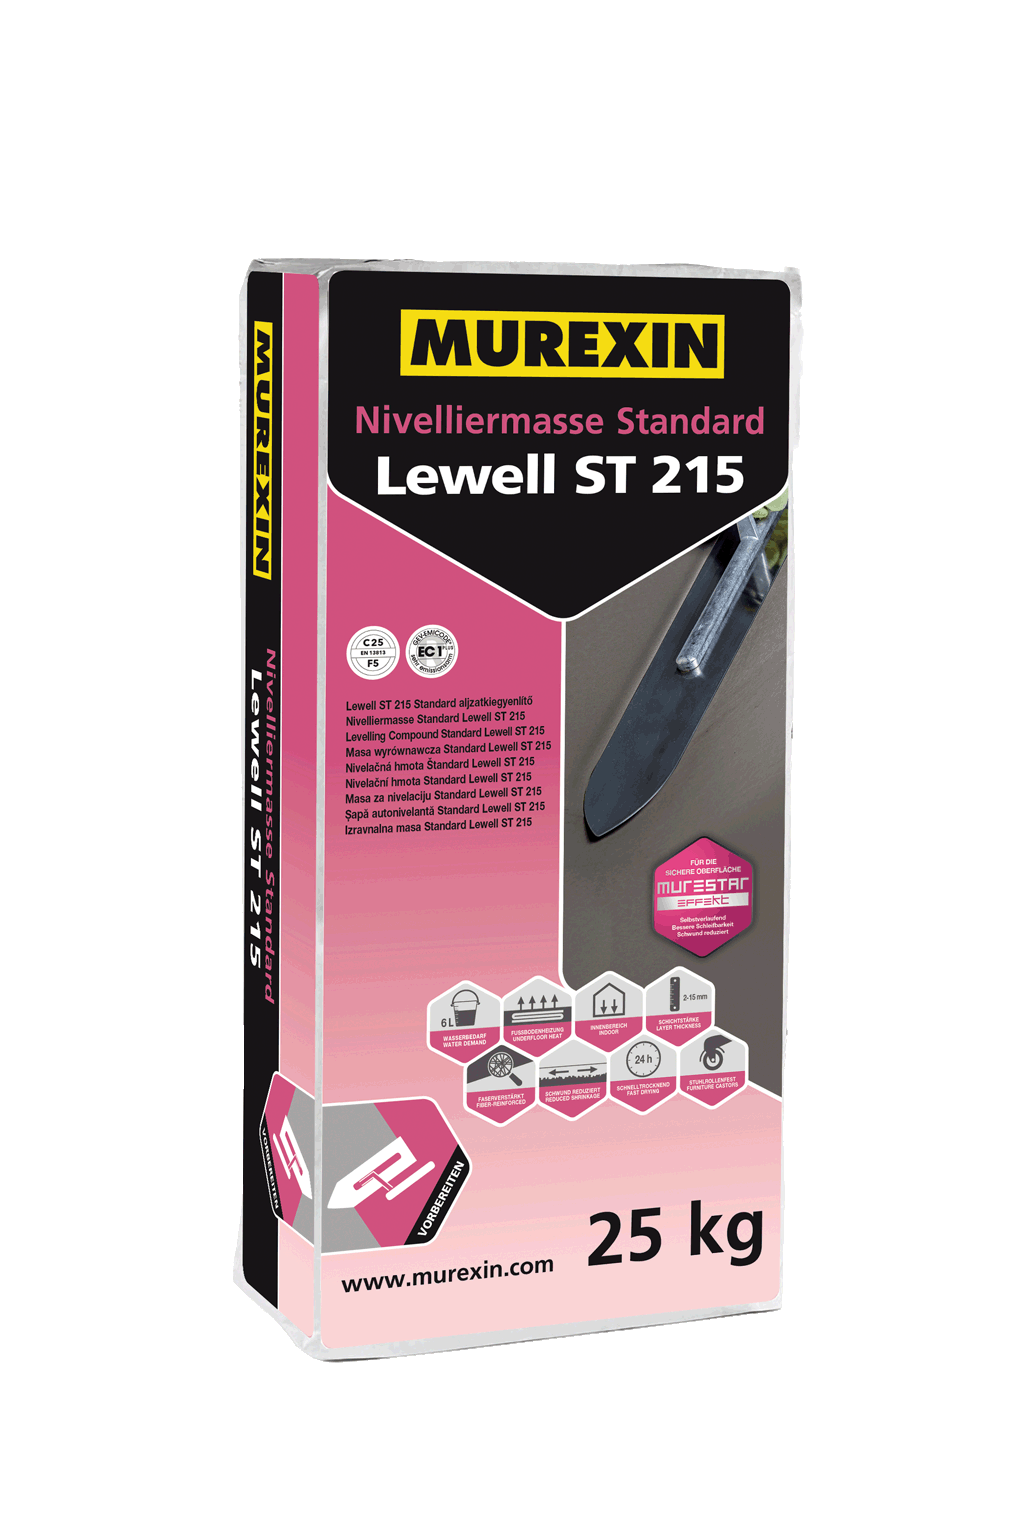 Murexin Lewell ST 215 Standard aljzatkiegyenlítő